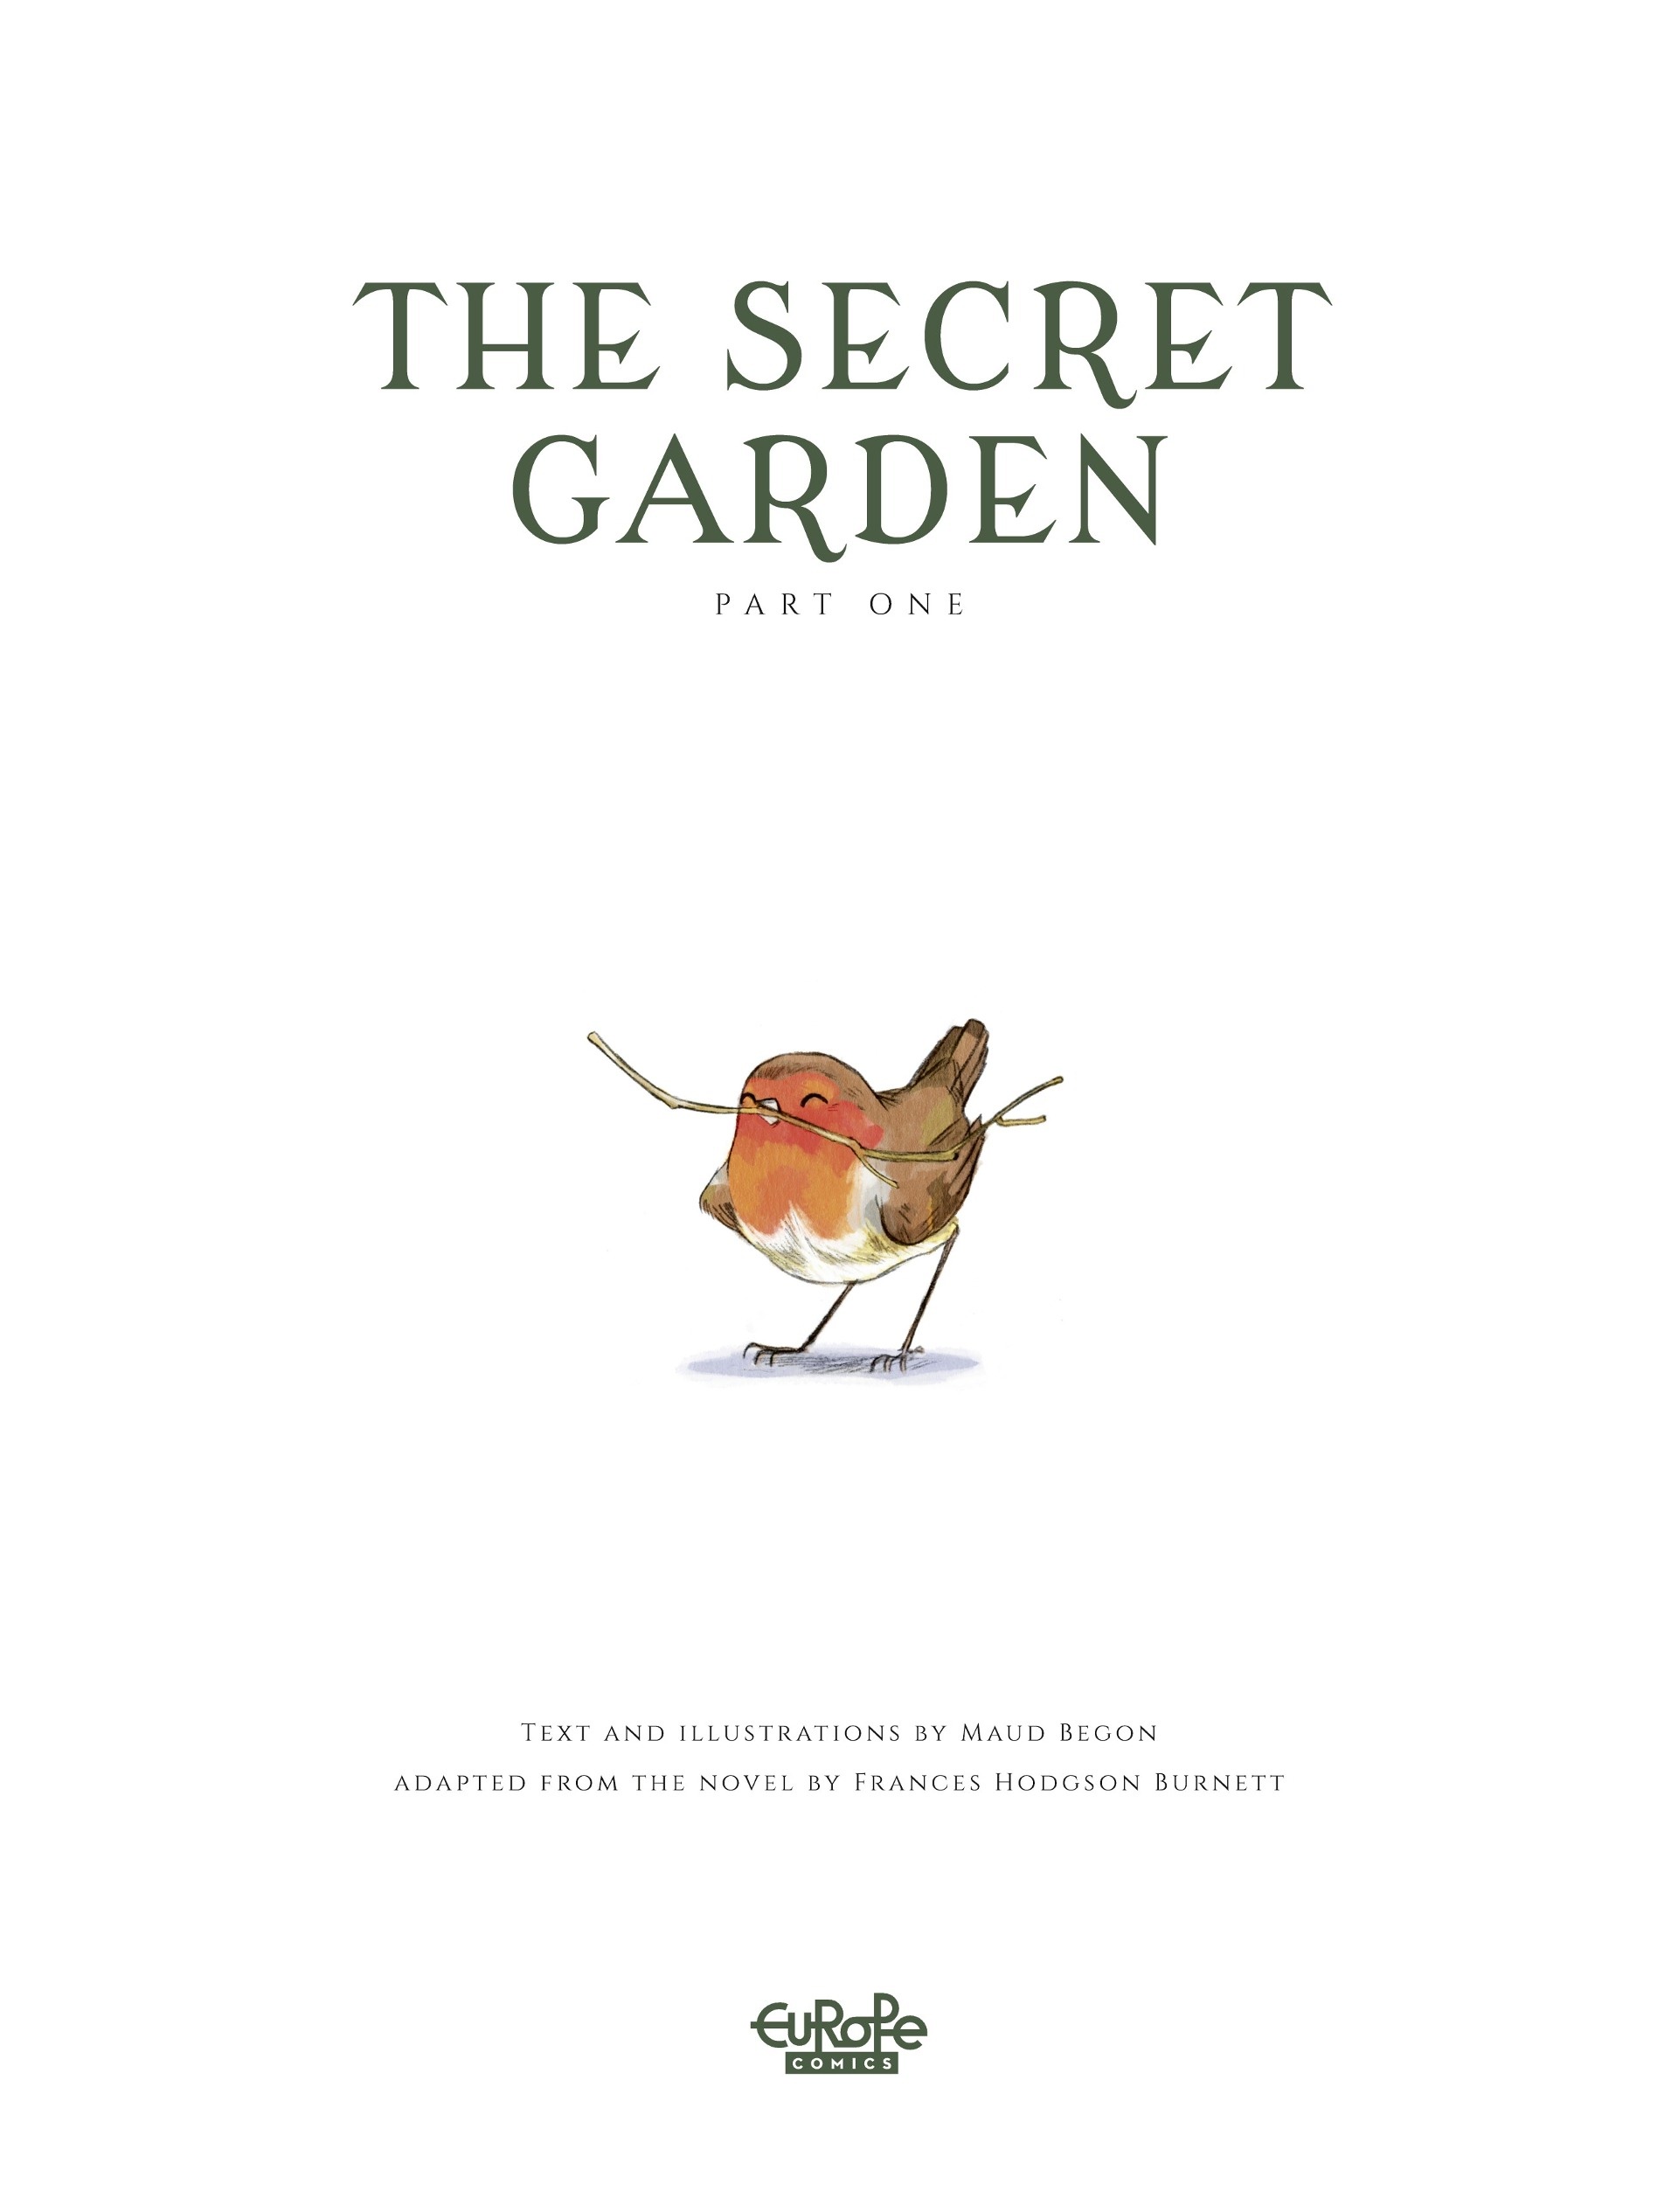 Read online The Secret Garden comic -  Issue # TPB 1 - 3